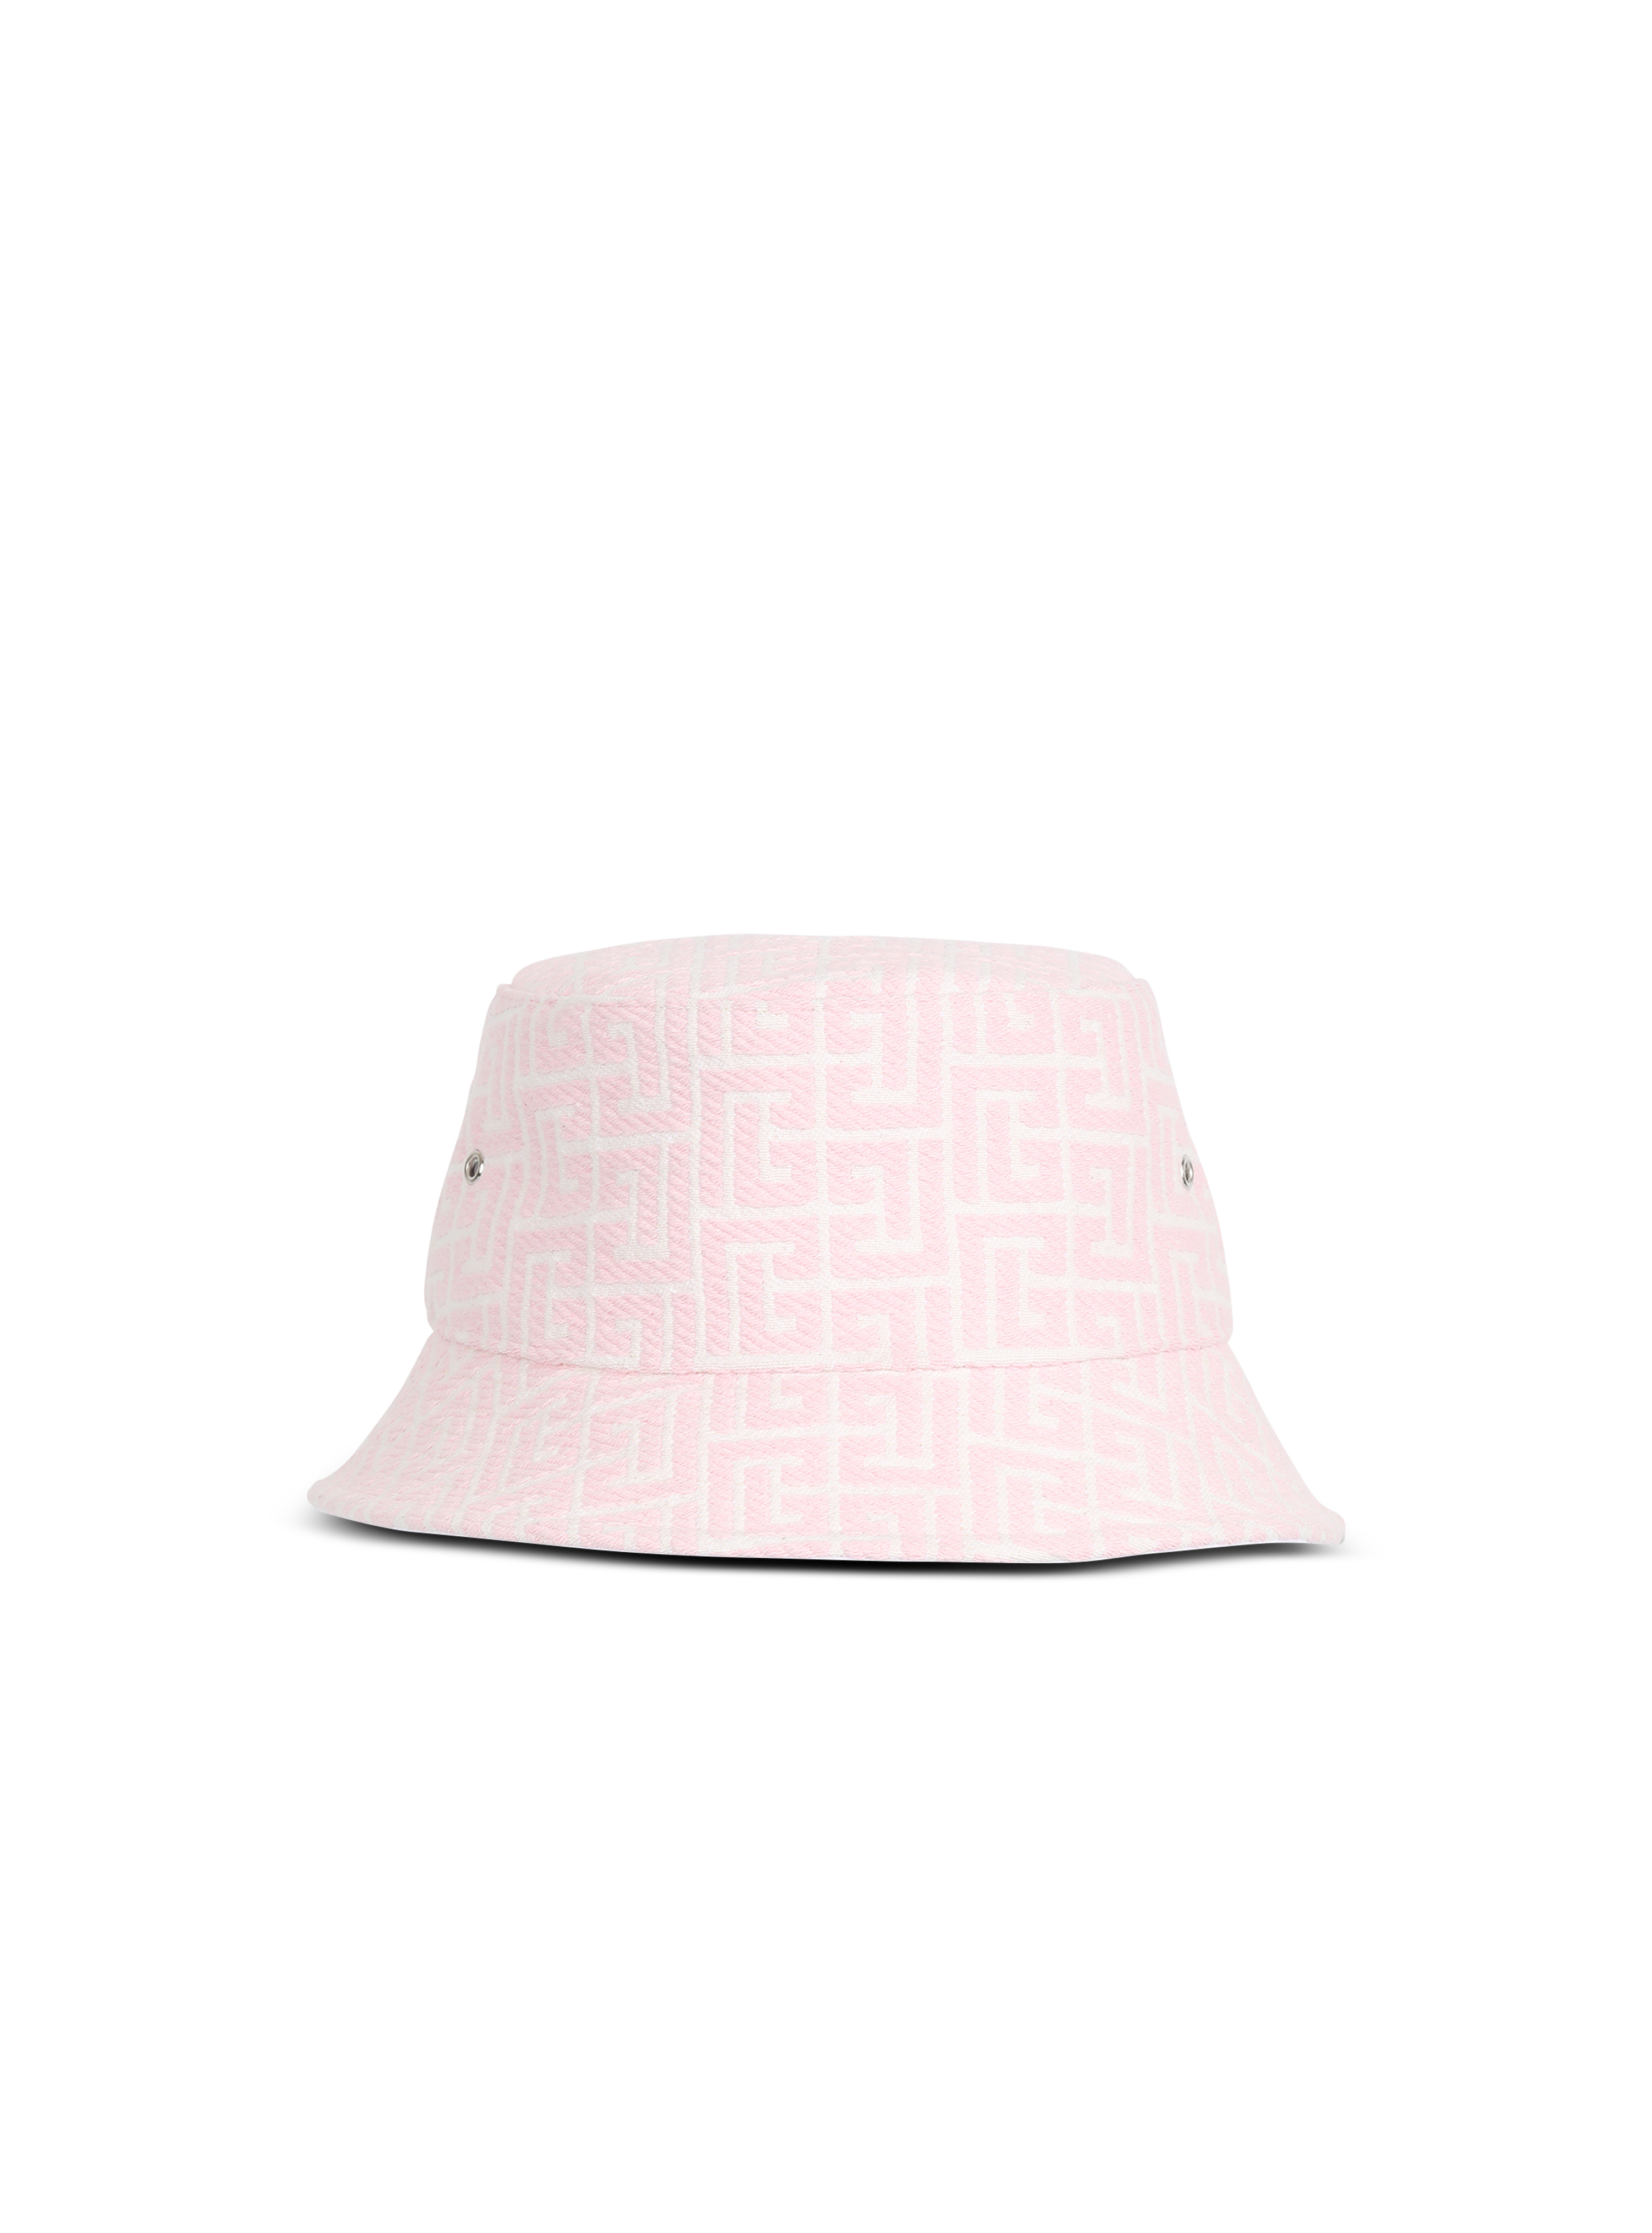 EXKLUSIVE - Bucket Hat aus Jacquard mit Balmain-Monogramm, rosa